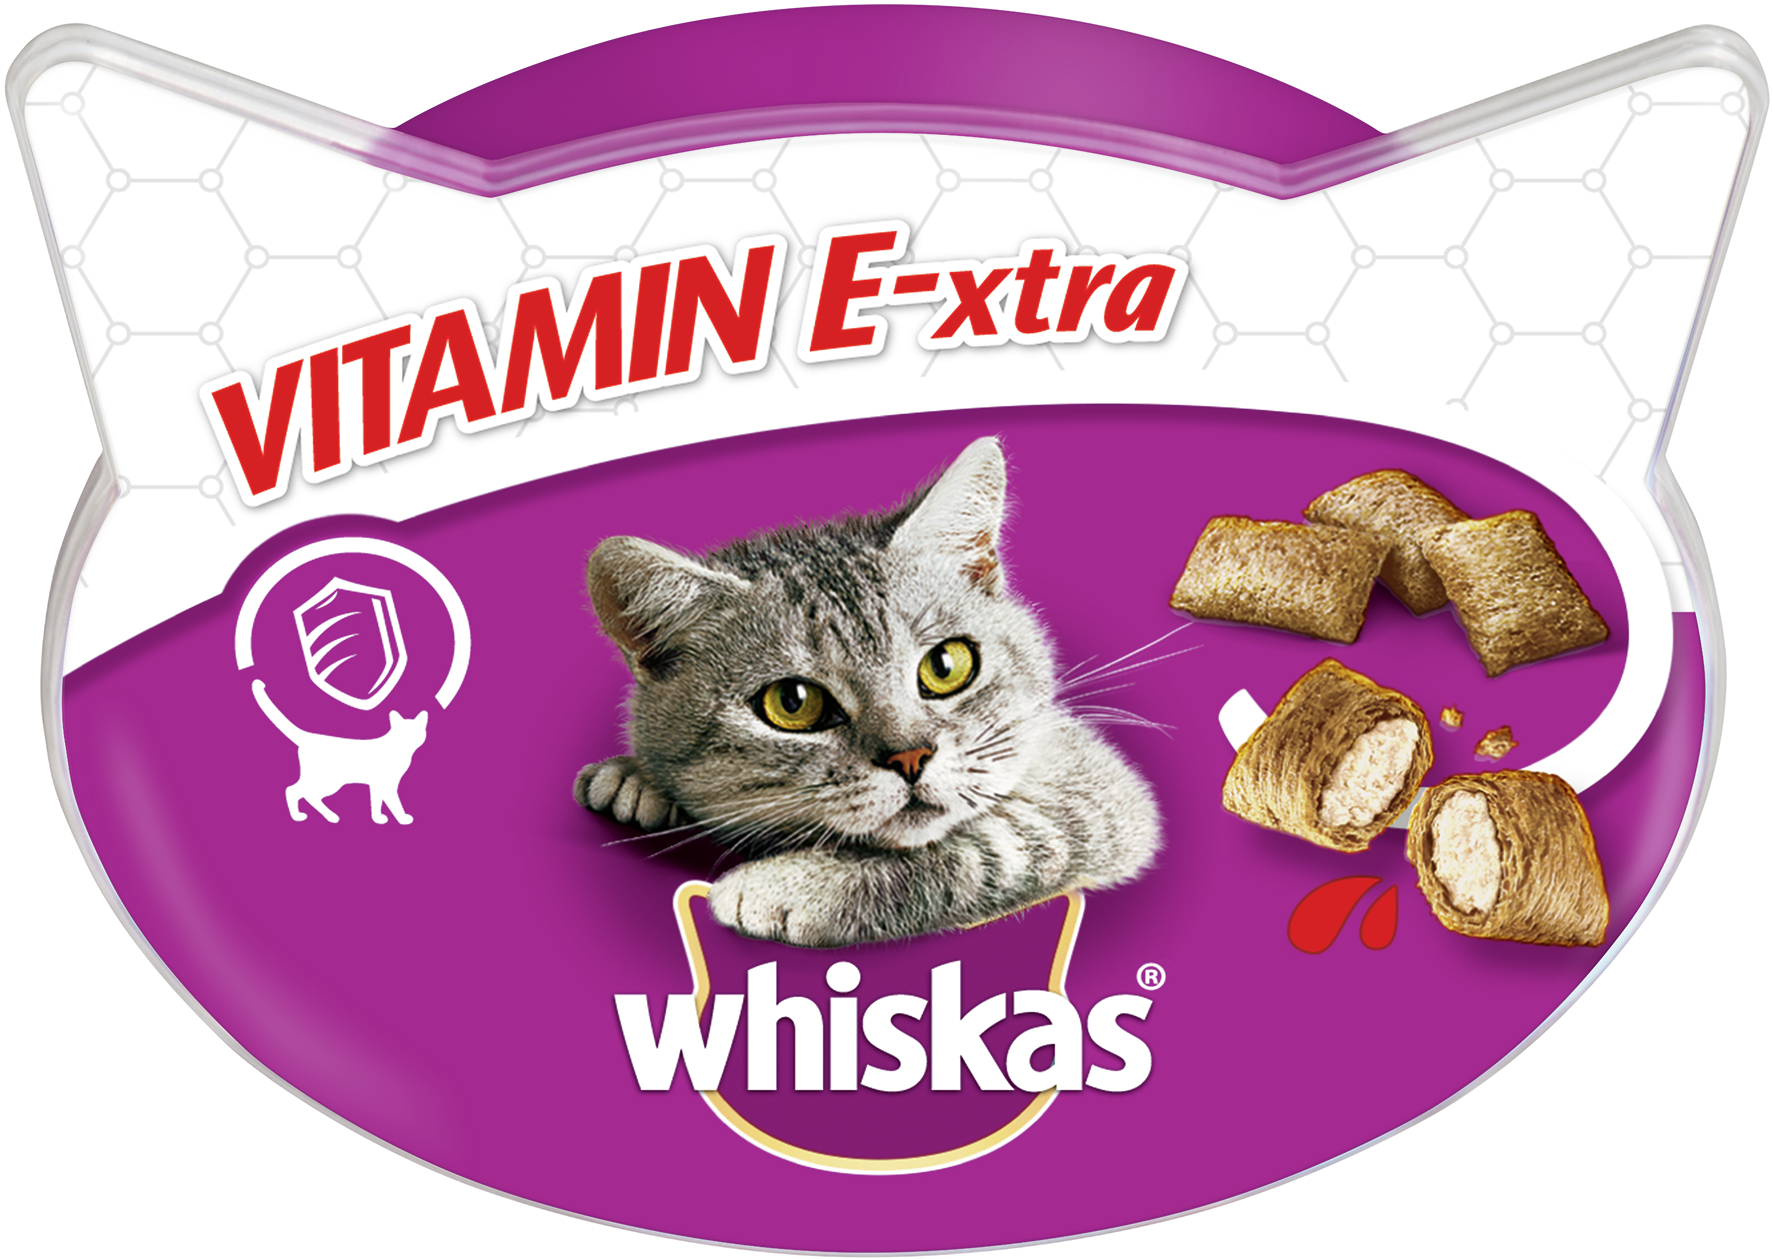 BTG BETEILIGUNGS GMBH Whi Snack Vitamin-E-xtra 50g 